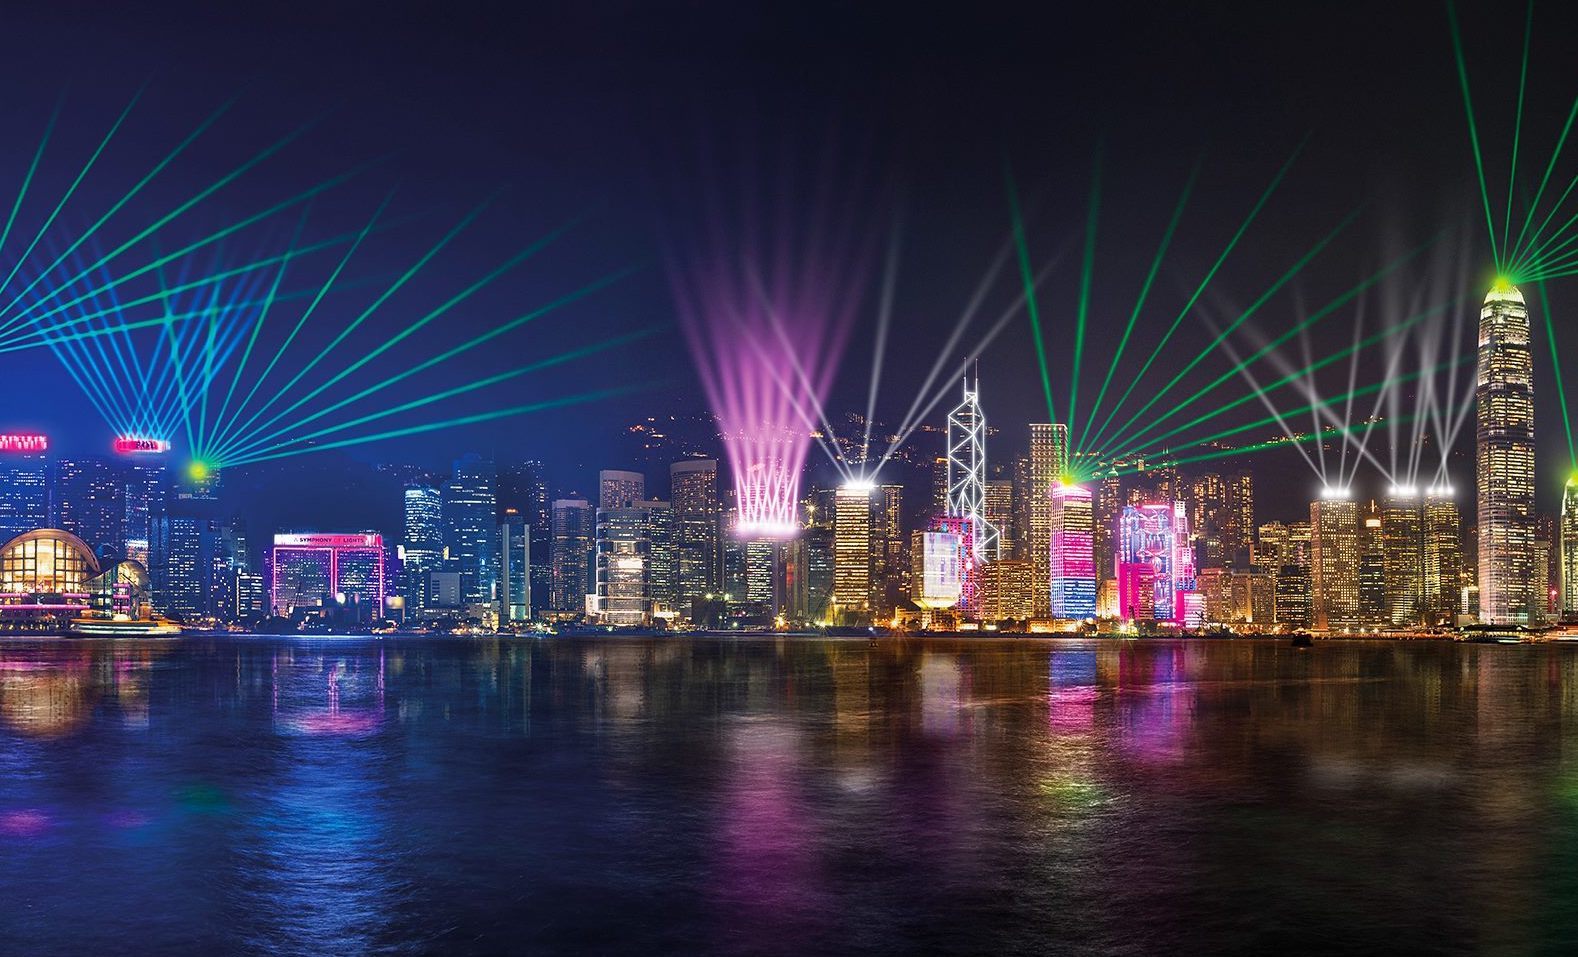 Symphony of Lights in Hong Kong